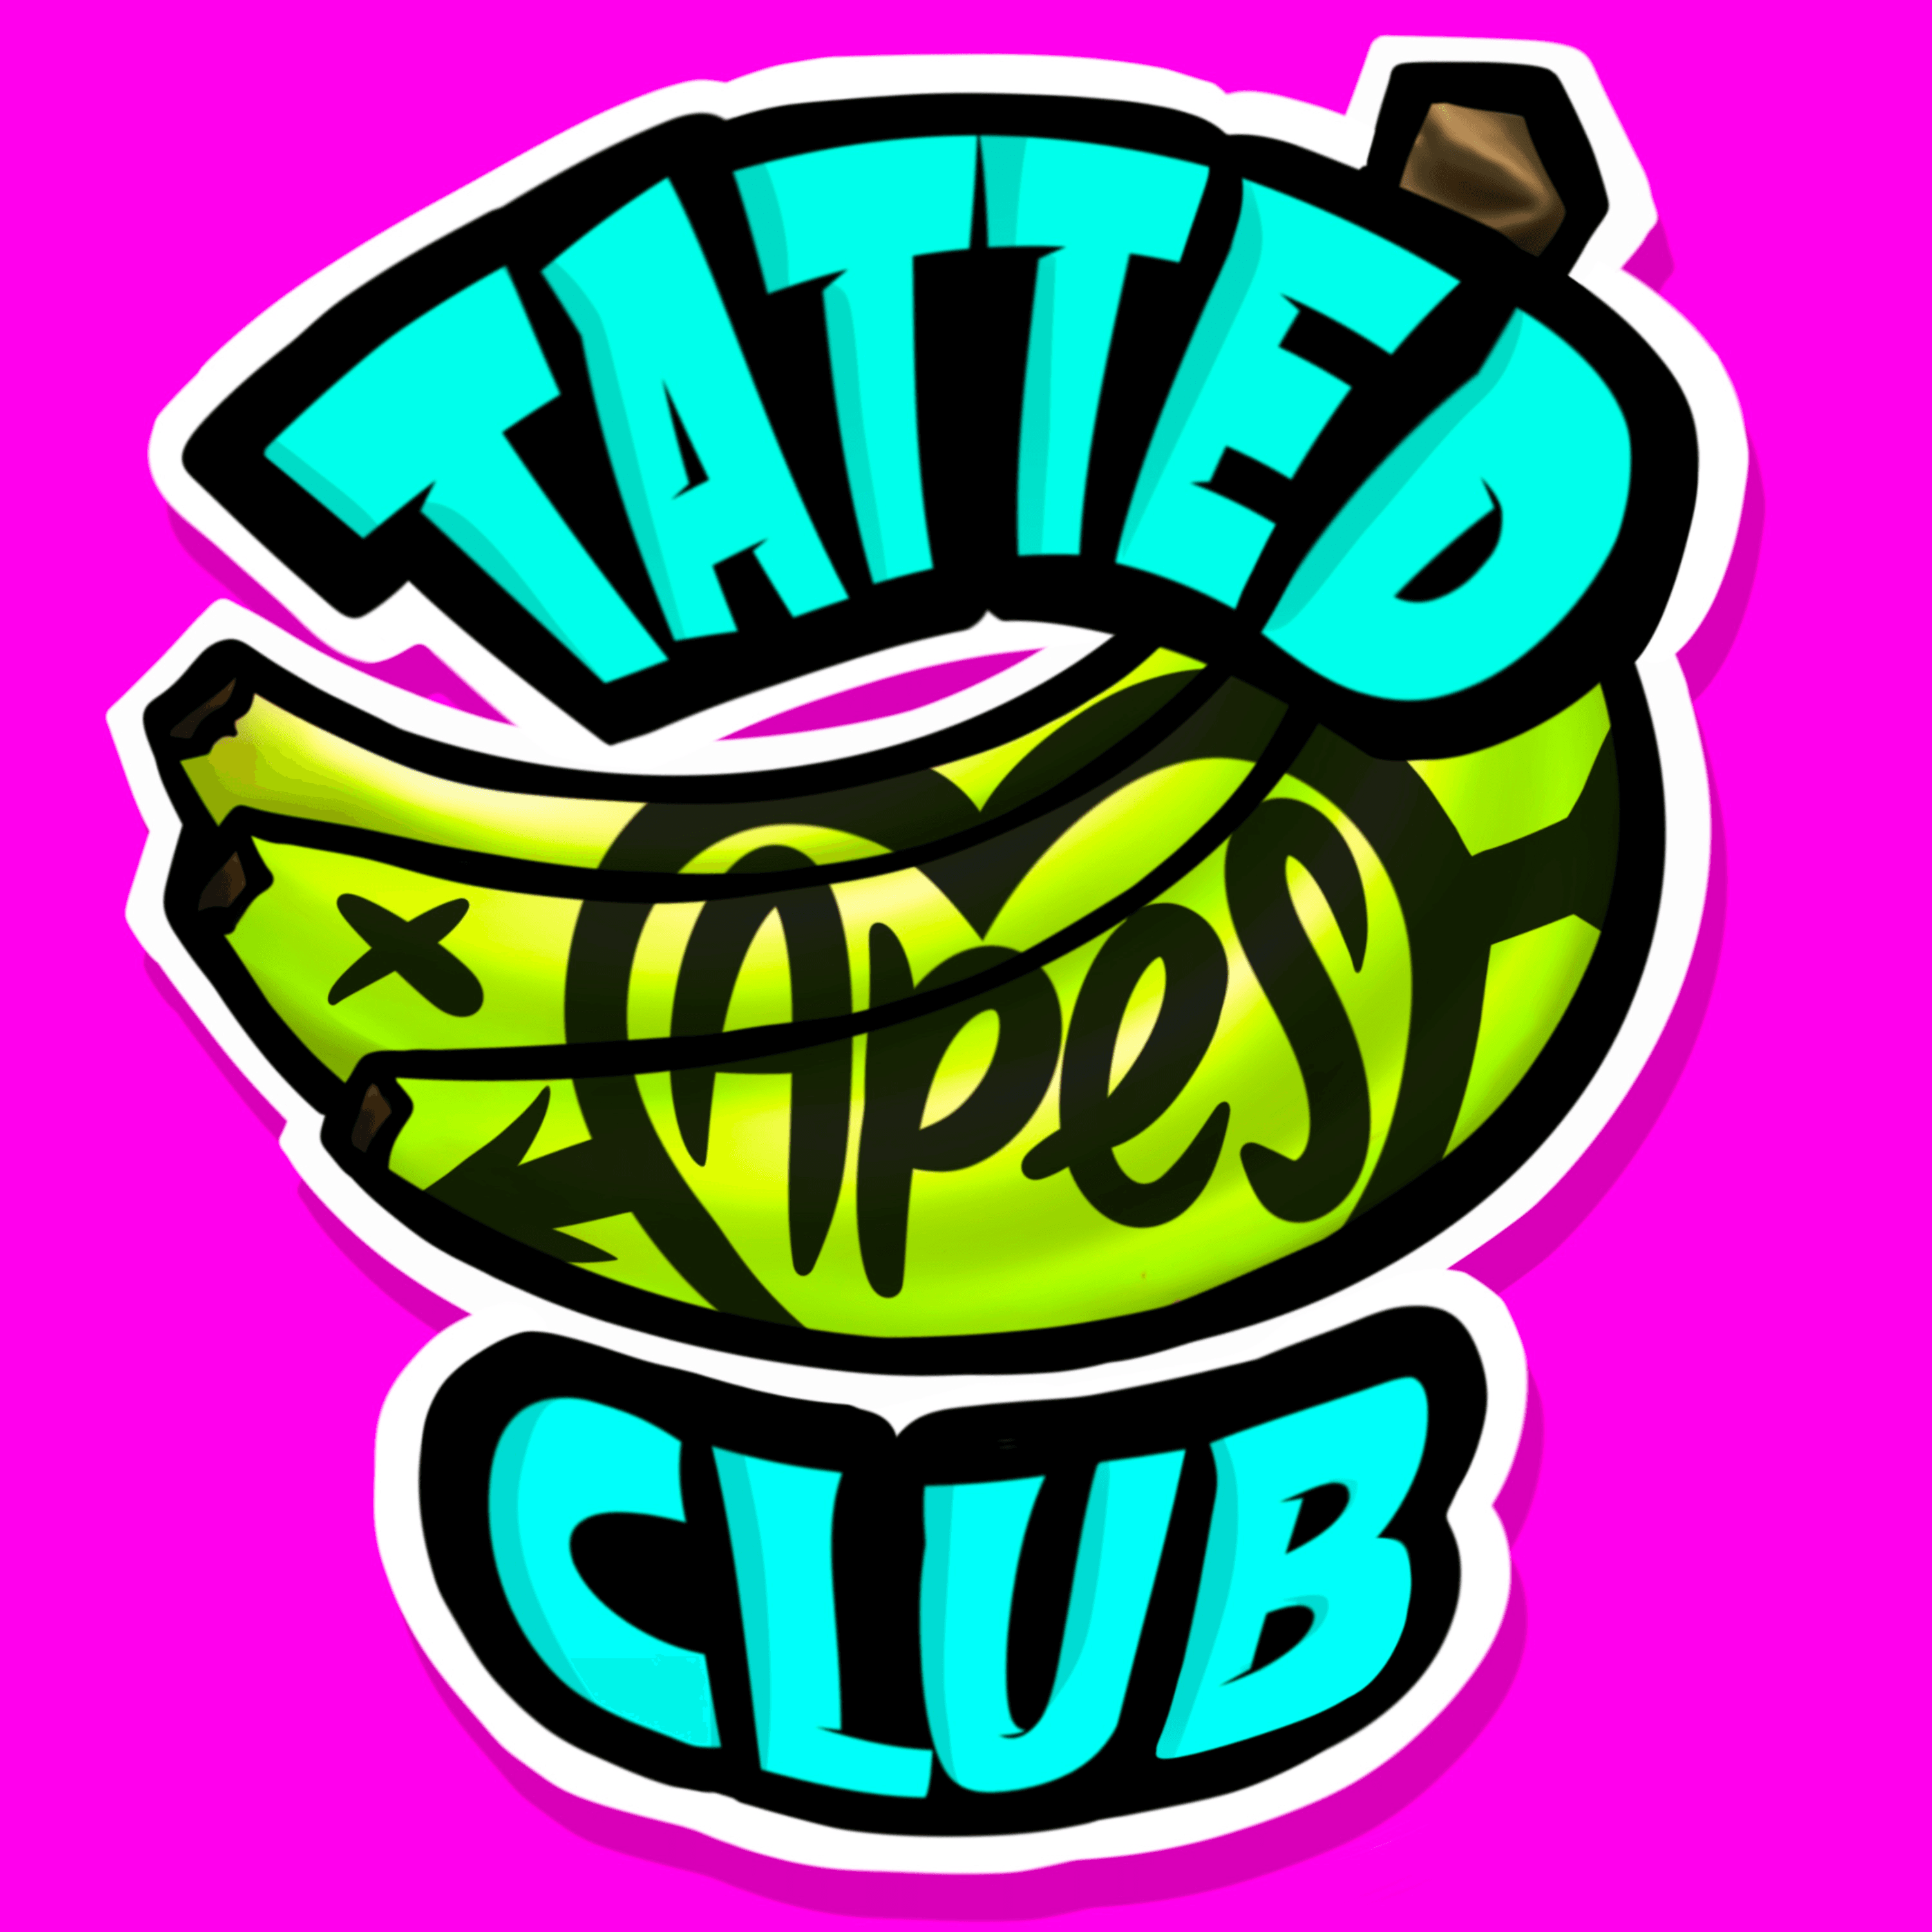 TattedApesClub